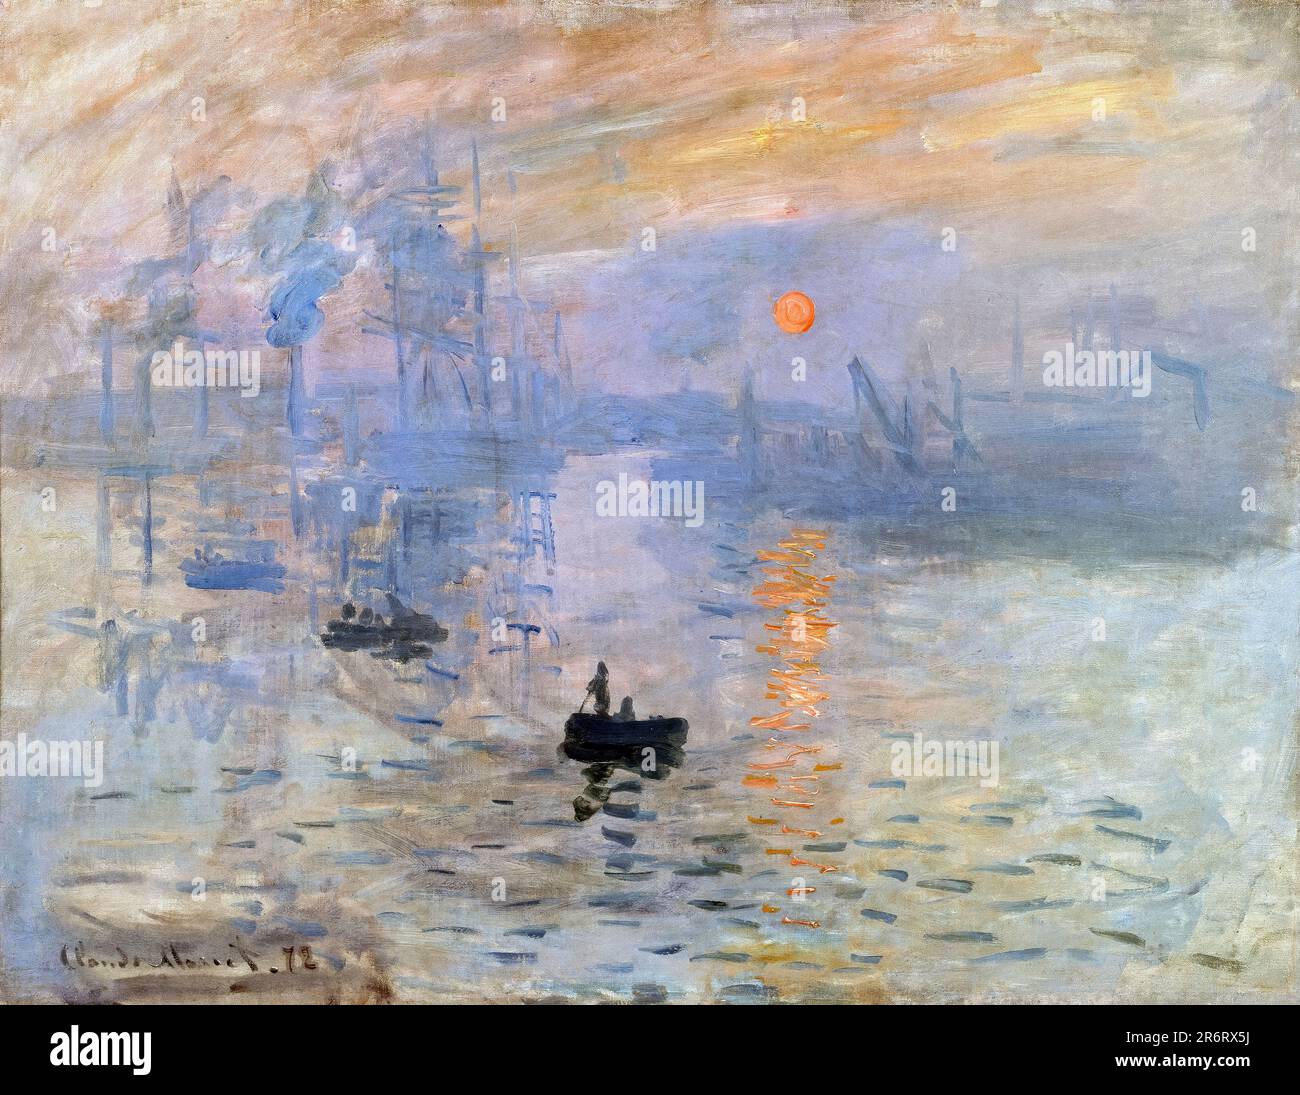 Impressione Sunrise, Monet. Pittura paesaggistica ad olio su tela di Claude Monet, 1872 Foto Stock